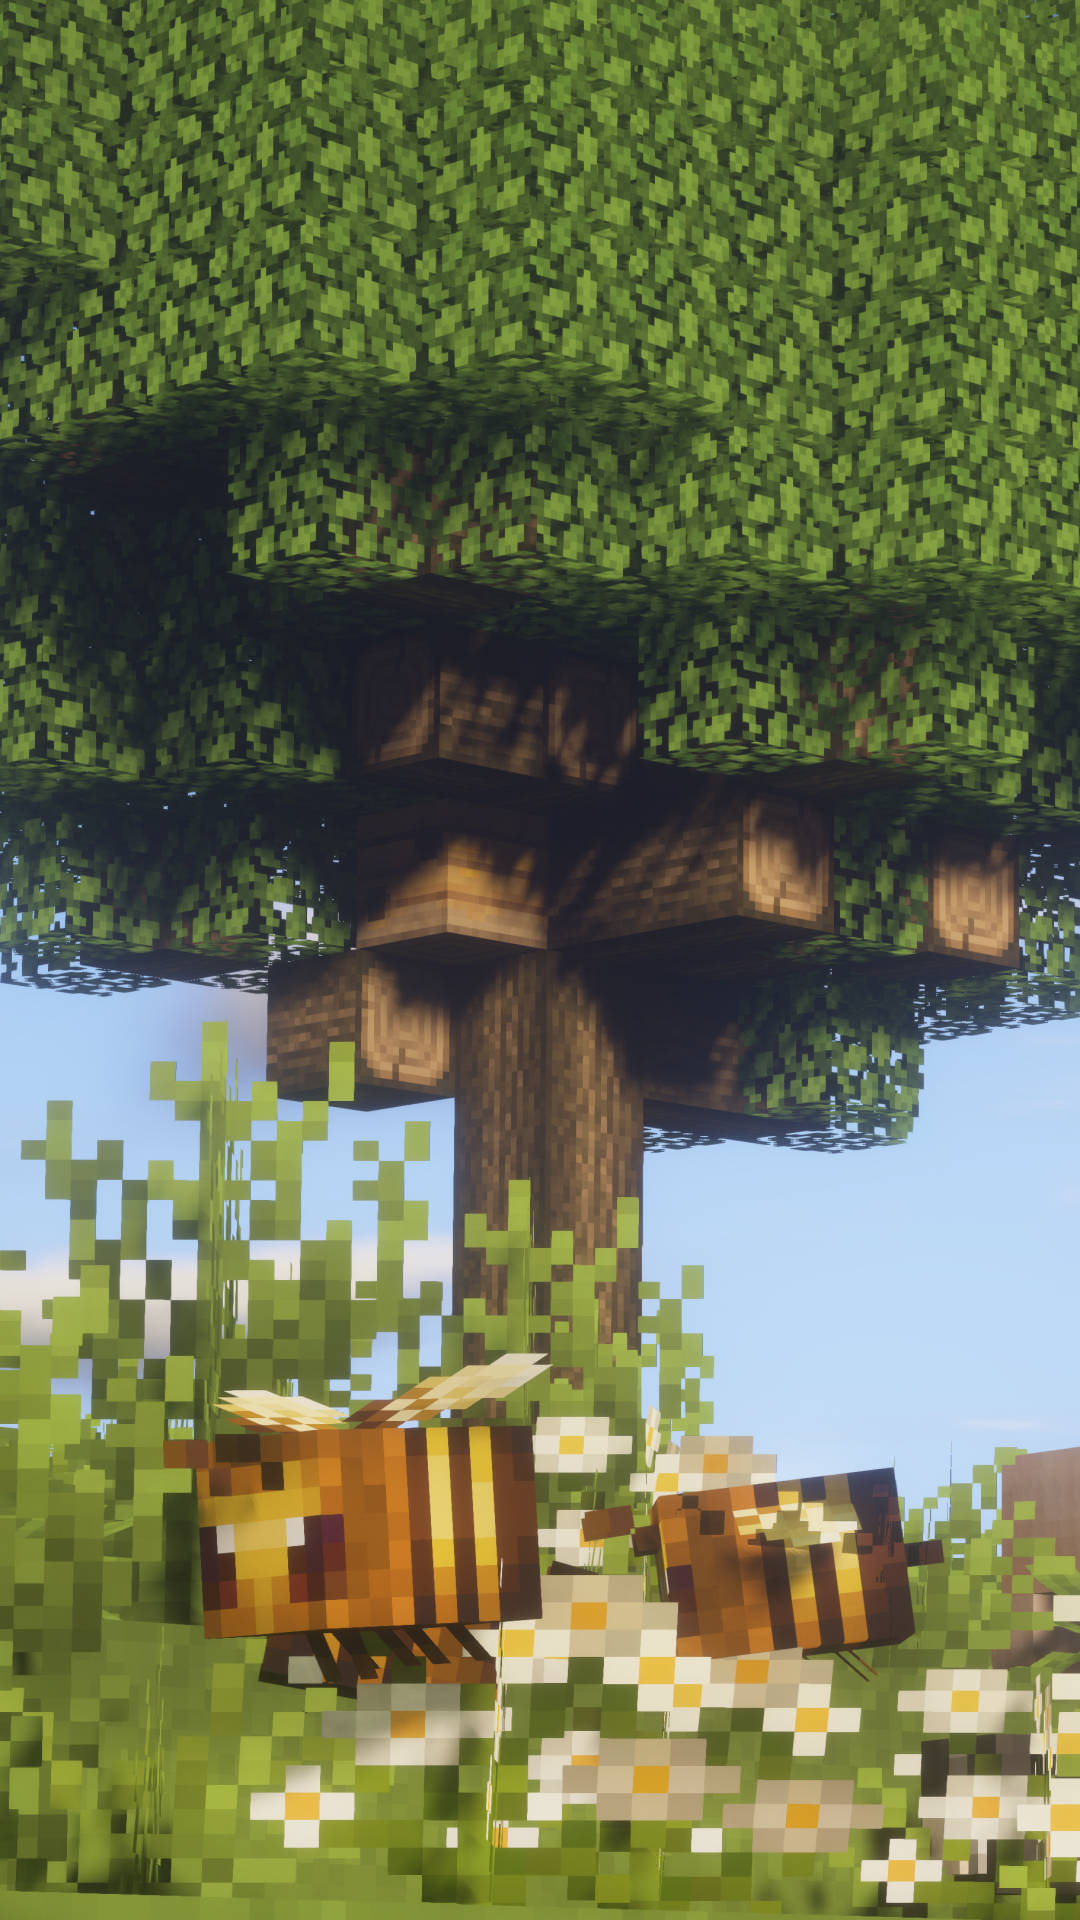 Minecraft Bees Under Tree